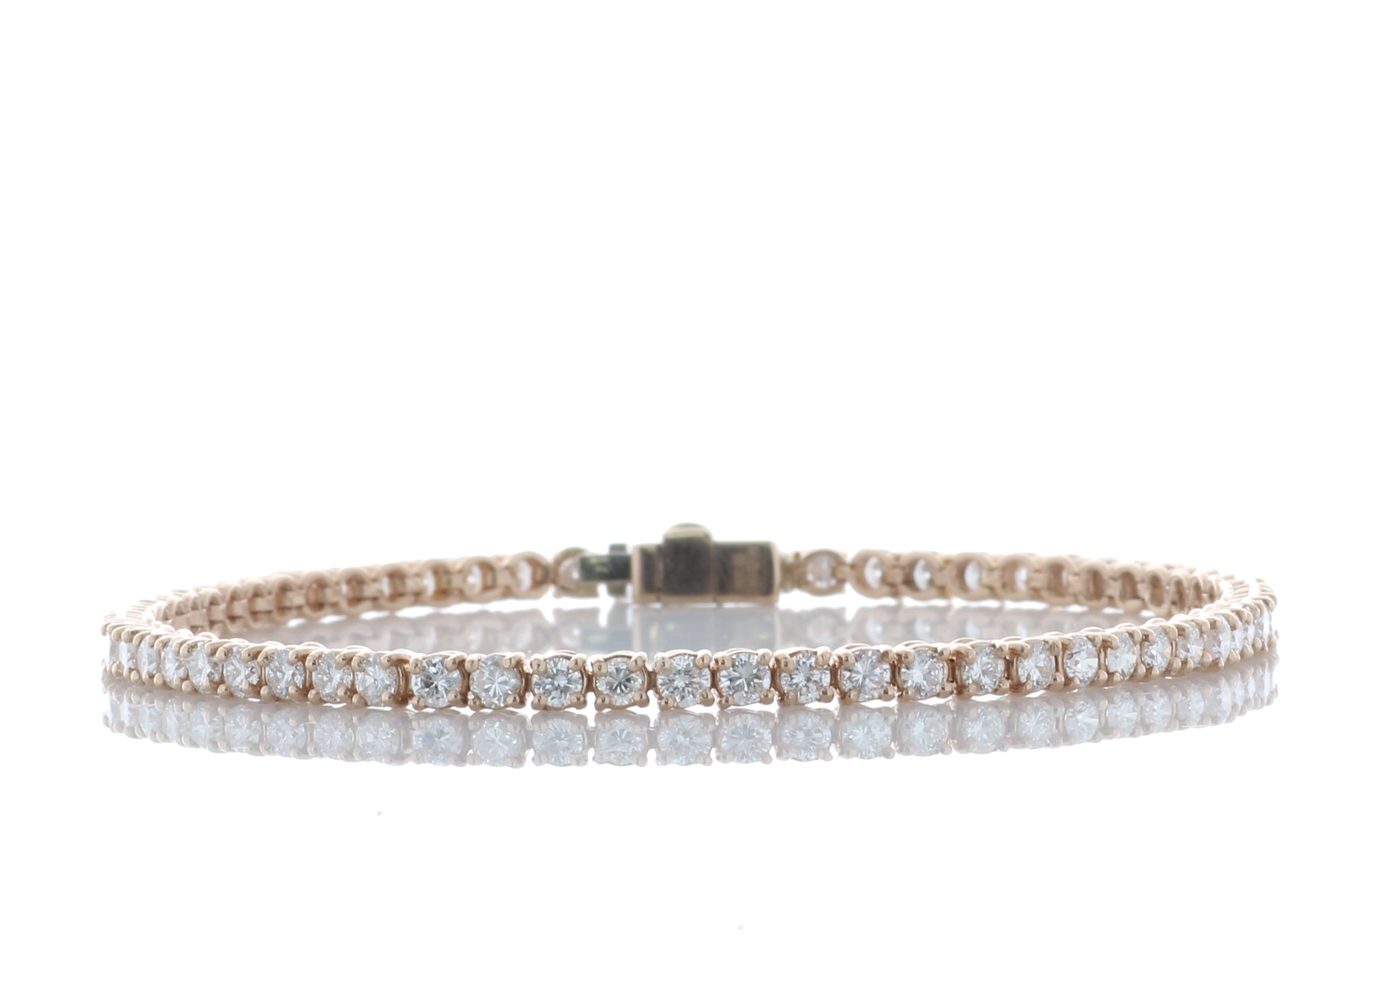 18ct Rose Gold Tennis Diamond Bracelet 4.70 Carats - Valued By IDI £20,180.00 - Fifty nine round